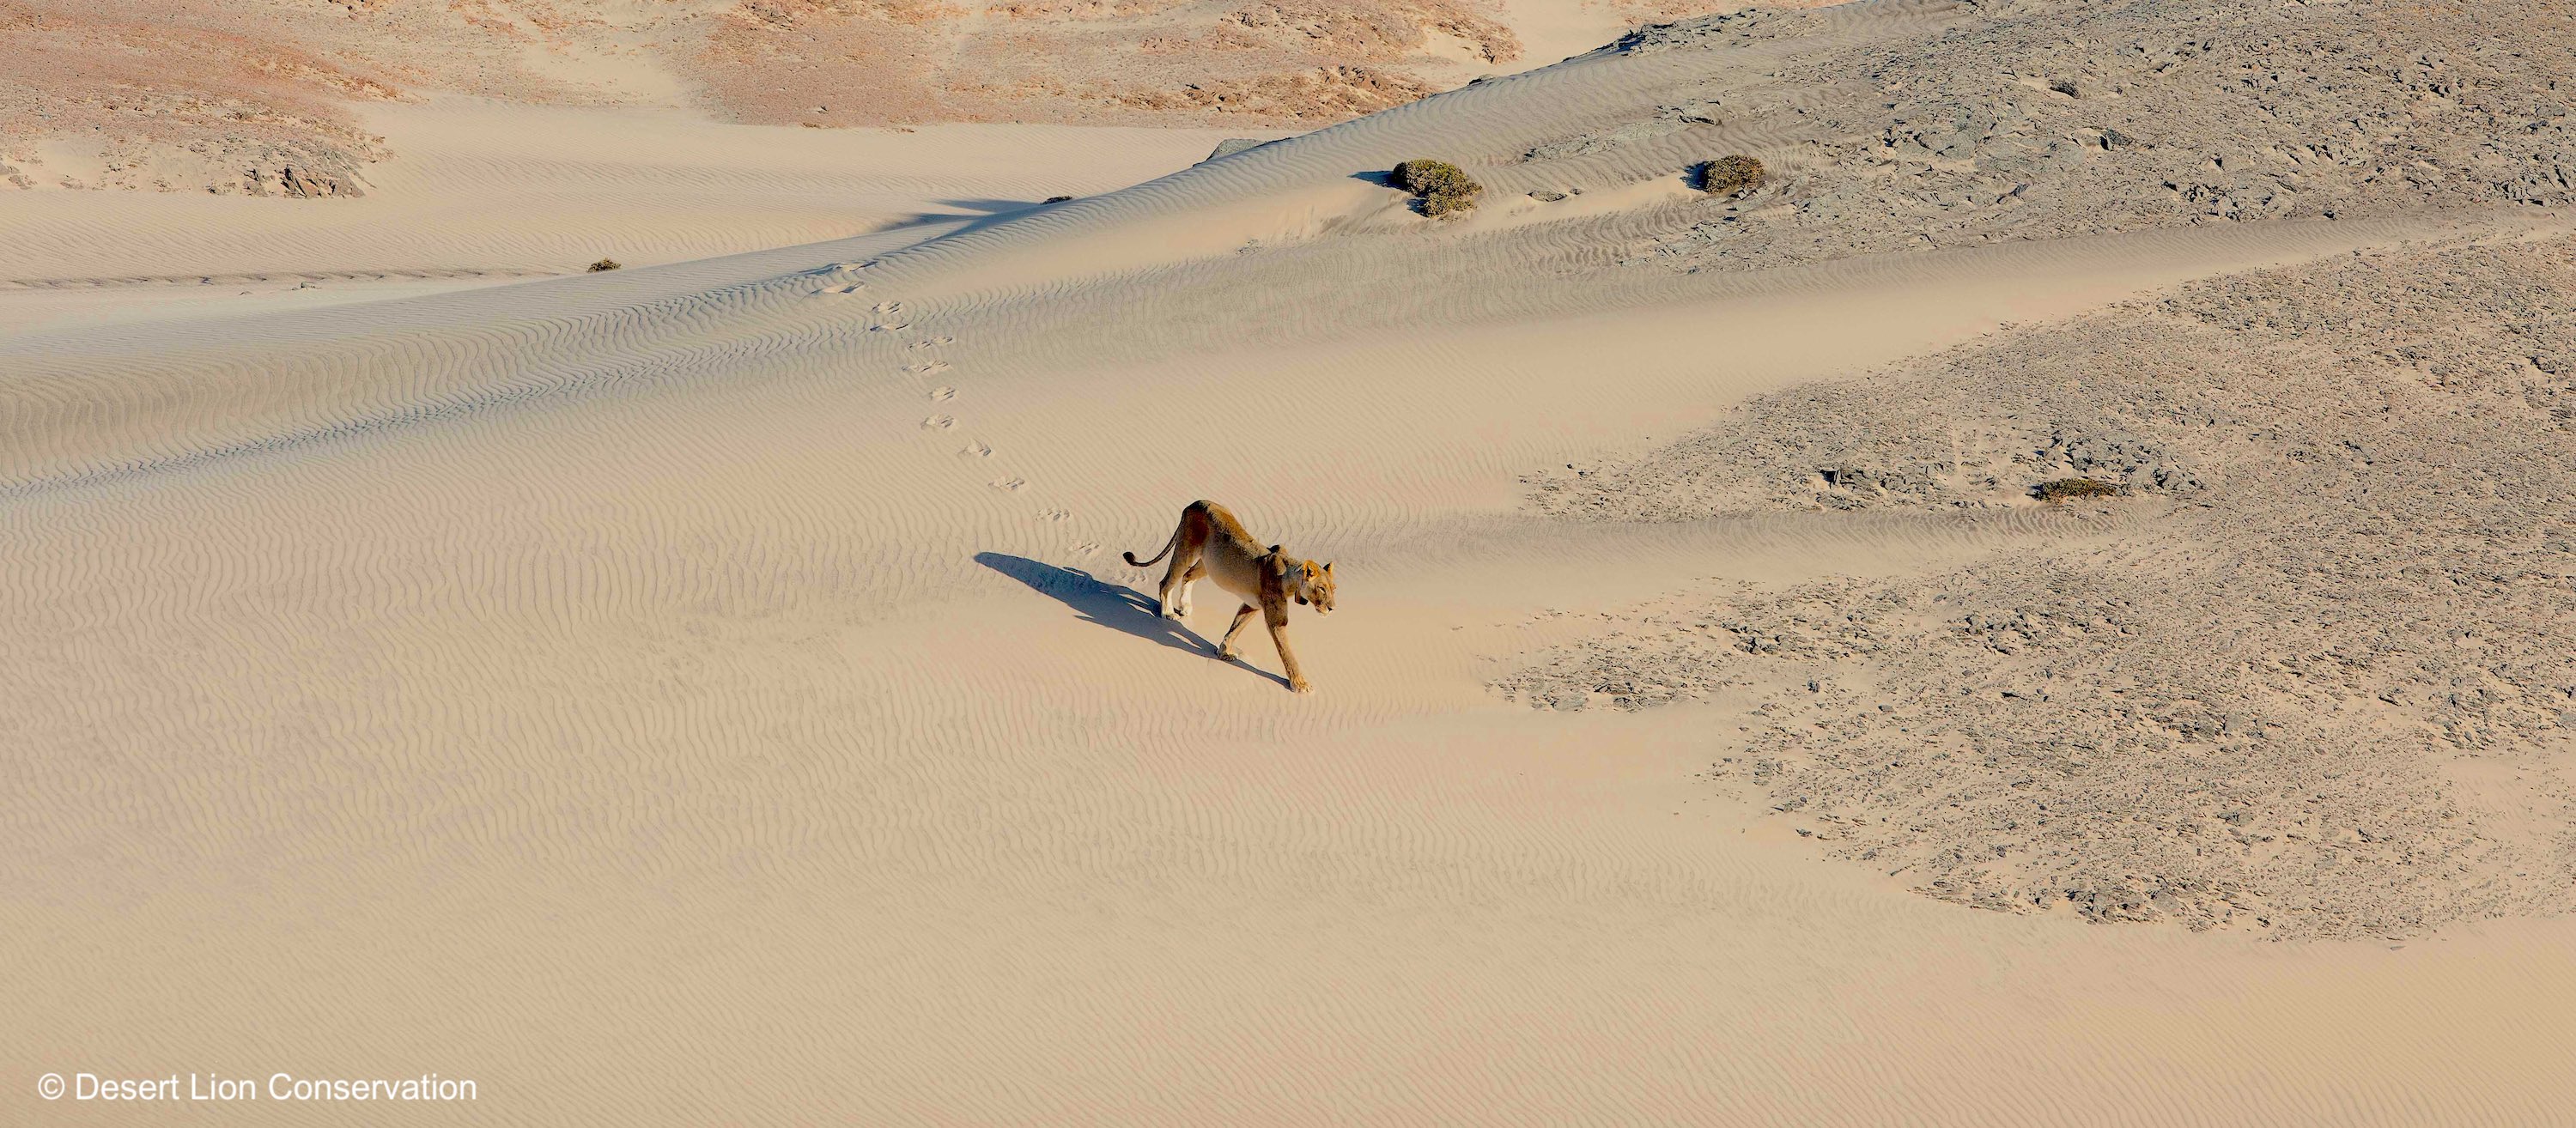 A lioness wearing a satellite collar walks through the desert sand.